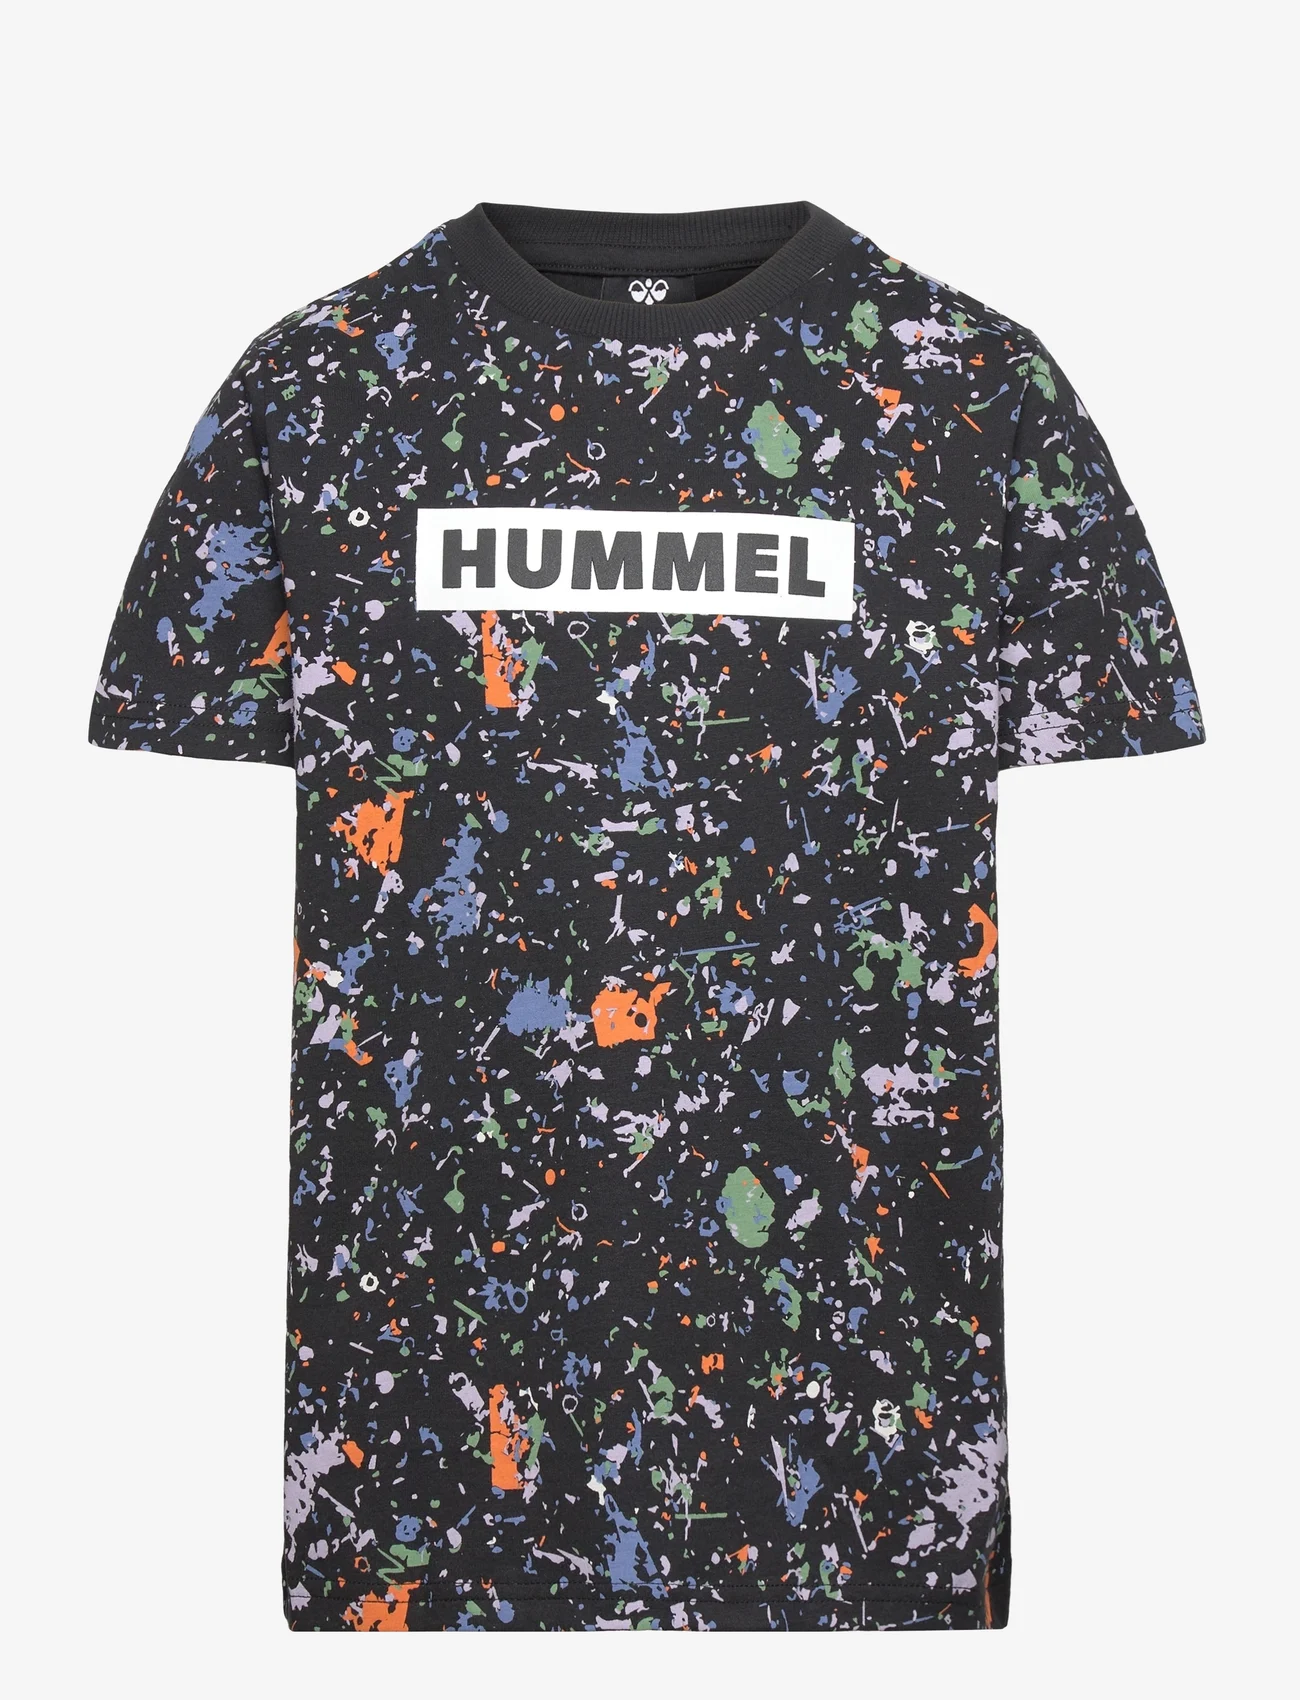 Hummel - hmlRUST T-SHIRT S/S - kurzärmelig - black - 0